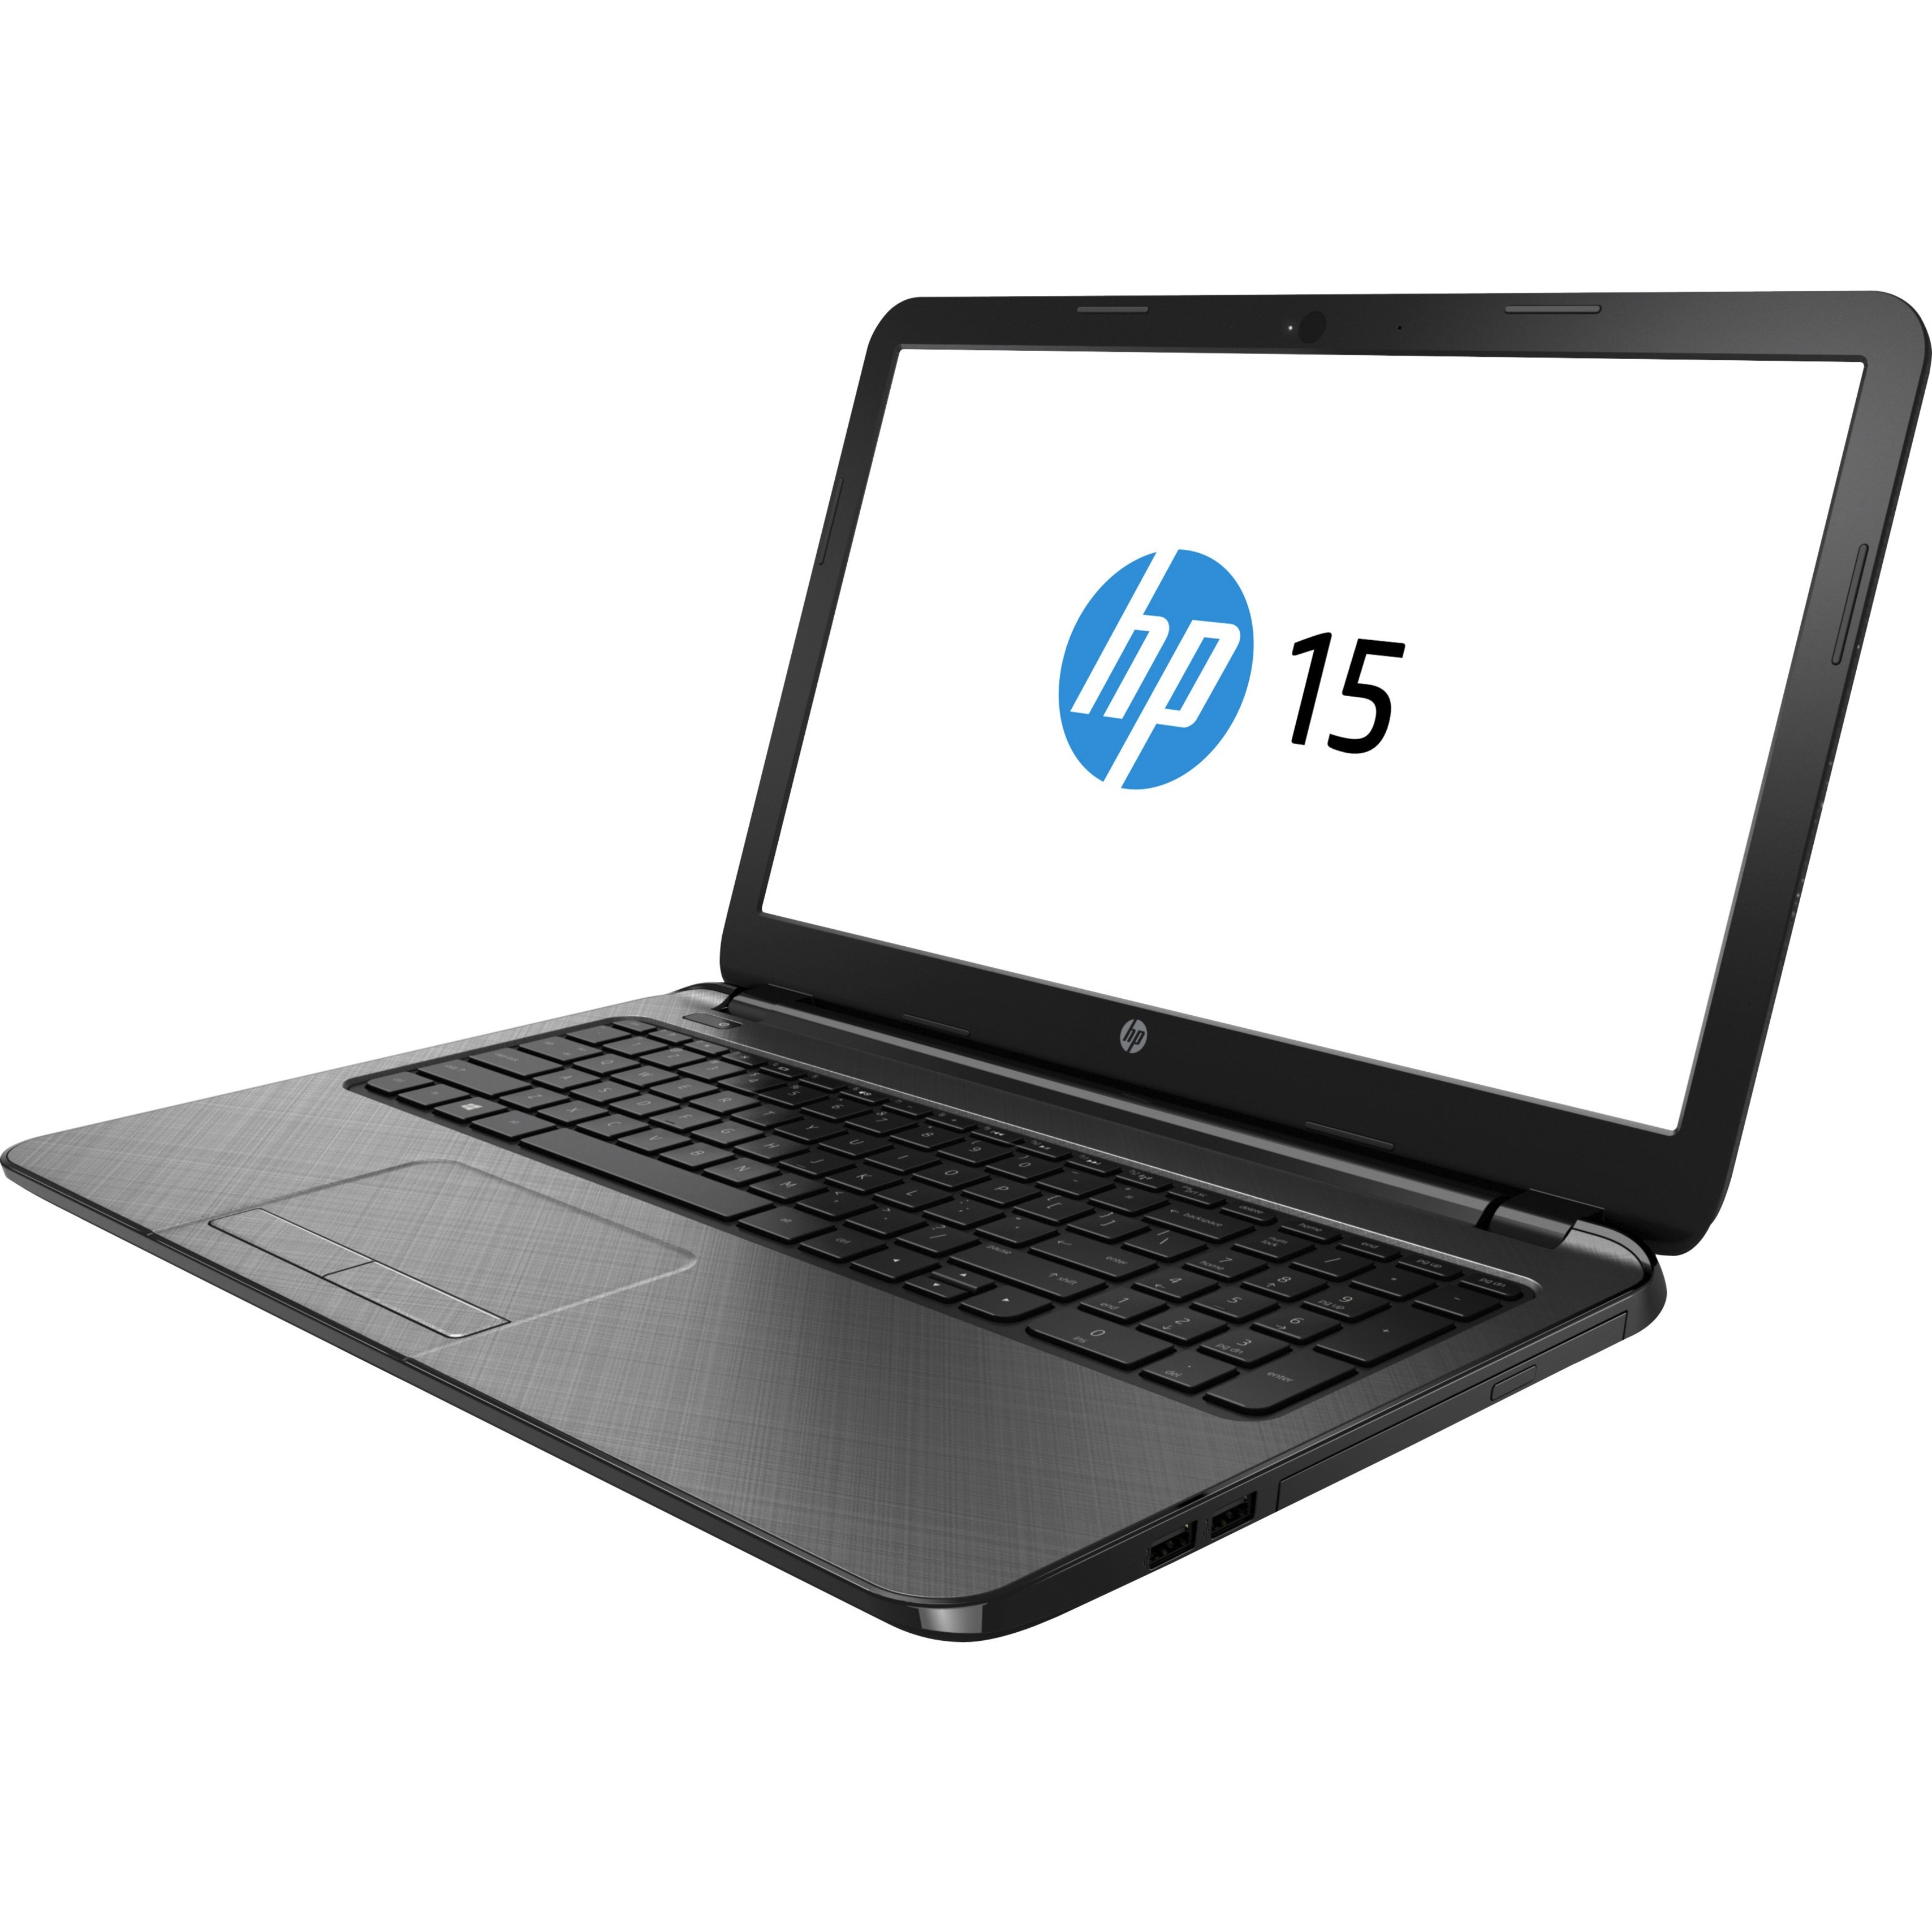 Restored HP TouchSmart 15.6" Touchscreen Laptop, AMD A-Series A8-6410, 4GB RAM, 750GB HD, DVD Writer, Windows 8.1, Black Licorice, 15-g059wm (Refurbished) - image 3 of 7